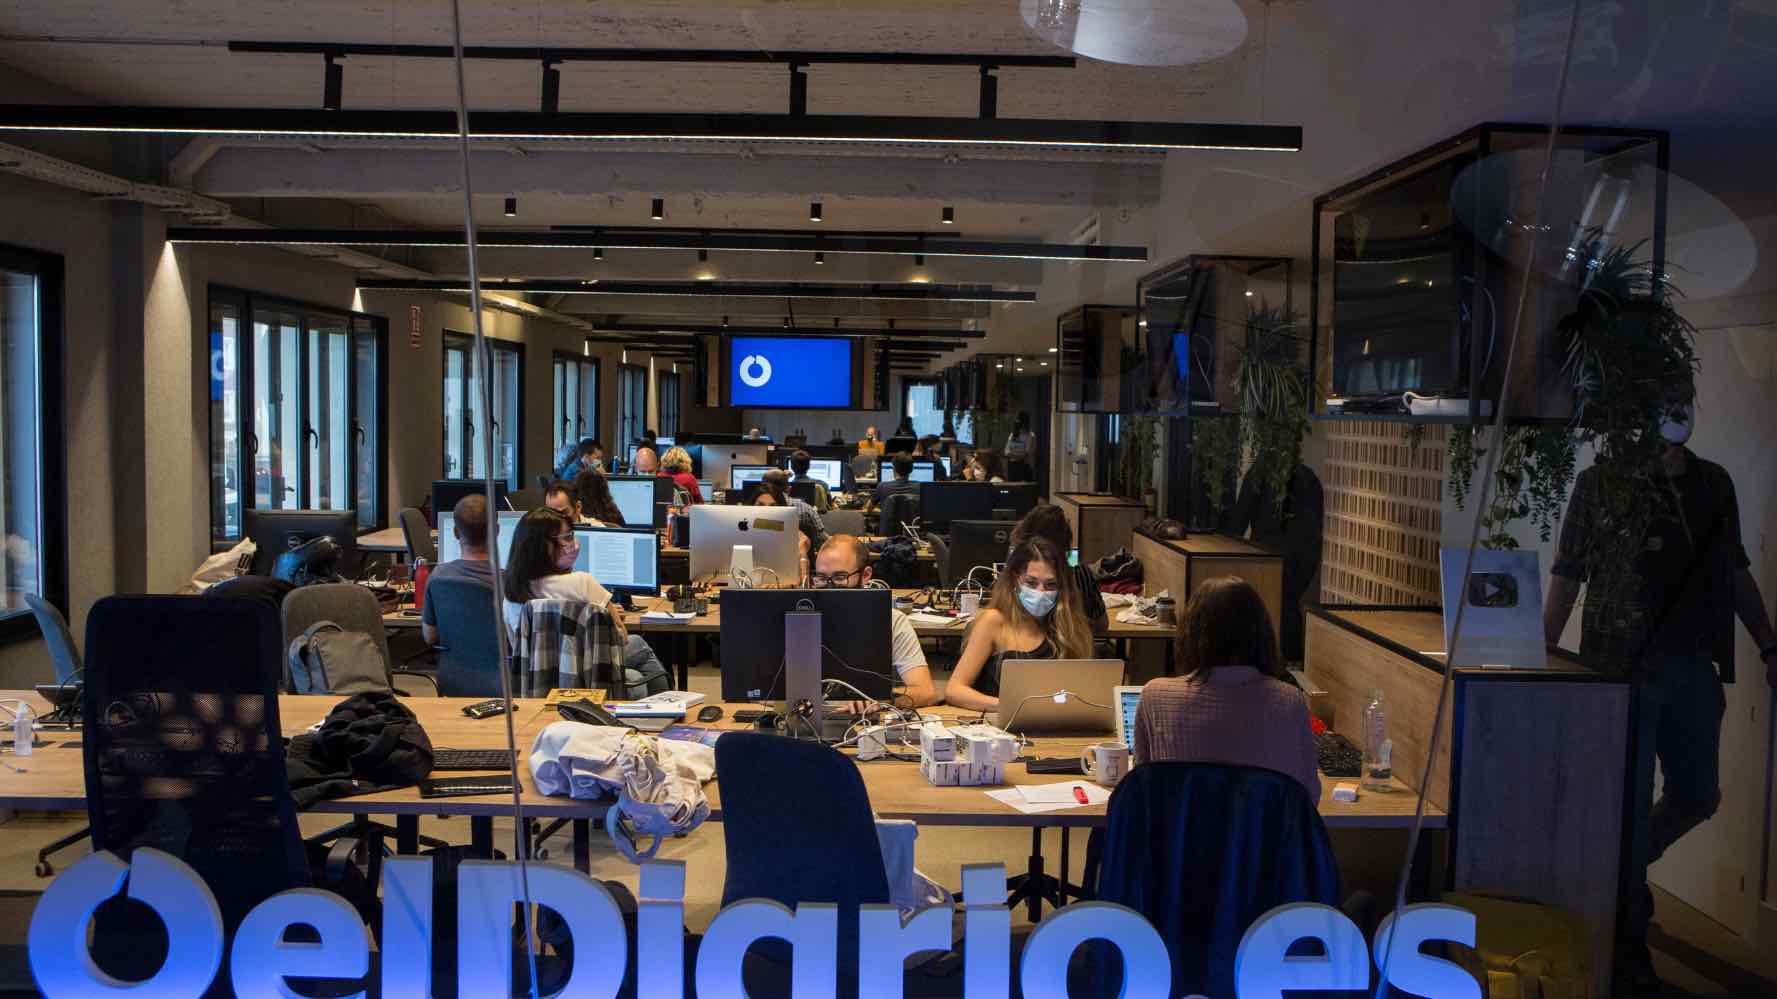 The newsroom of Spanish news organisation 'elDiario.es' in Madrid. Credit: Elvira Megías from 'elDiario.es'